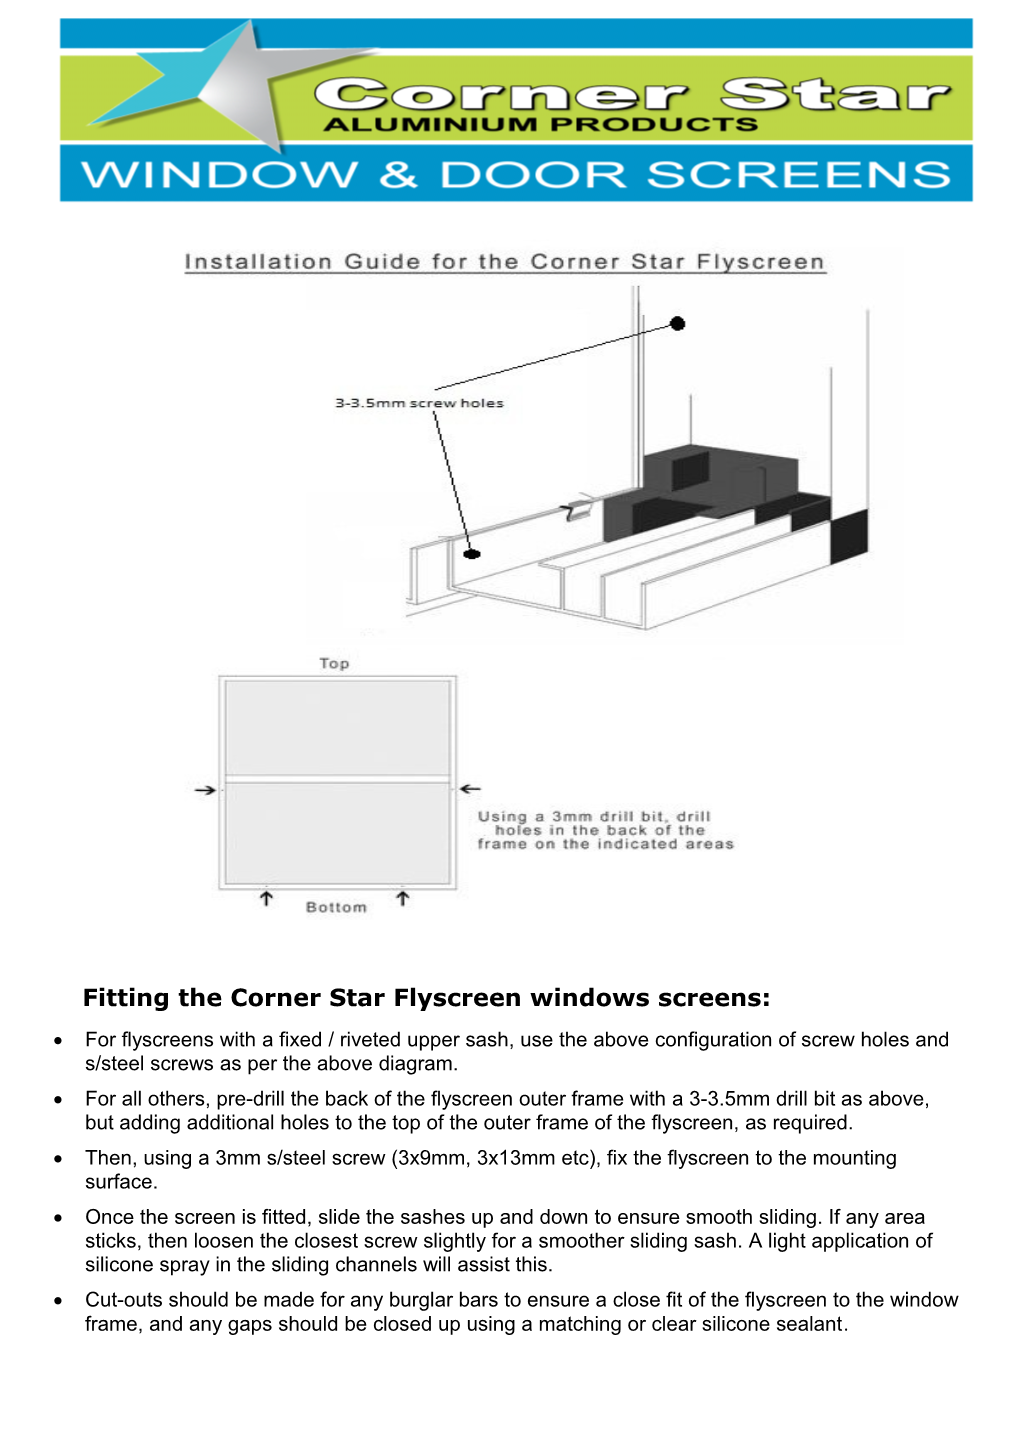 Fitting the Corner Star Flyscreen Windows Screens